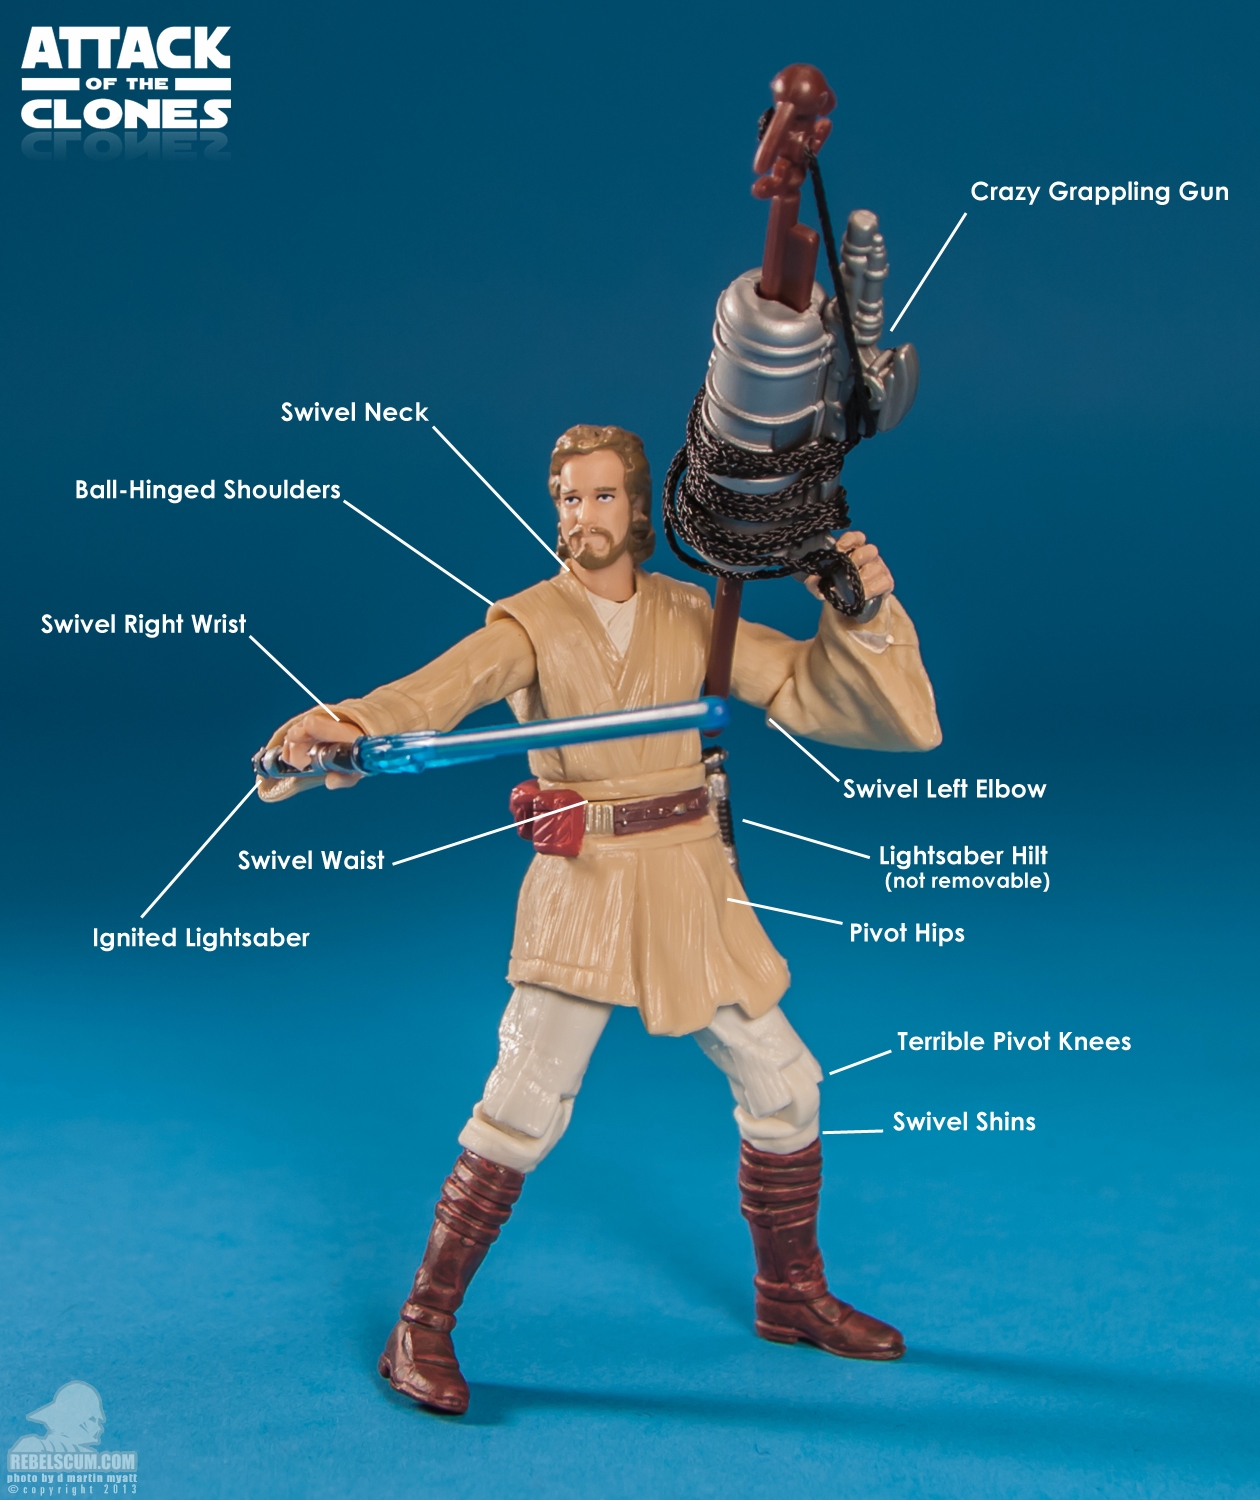 MH03_2013_Obi-Wan_Kenobi_Movie_Heroes_Star_Wars-13.jpg